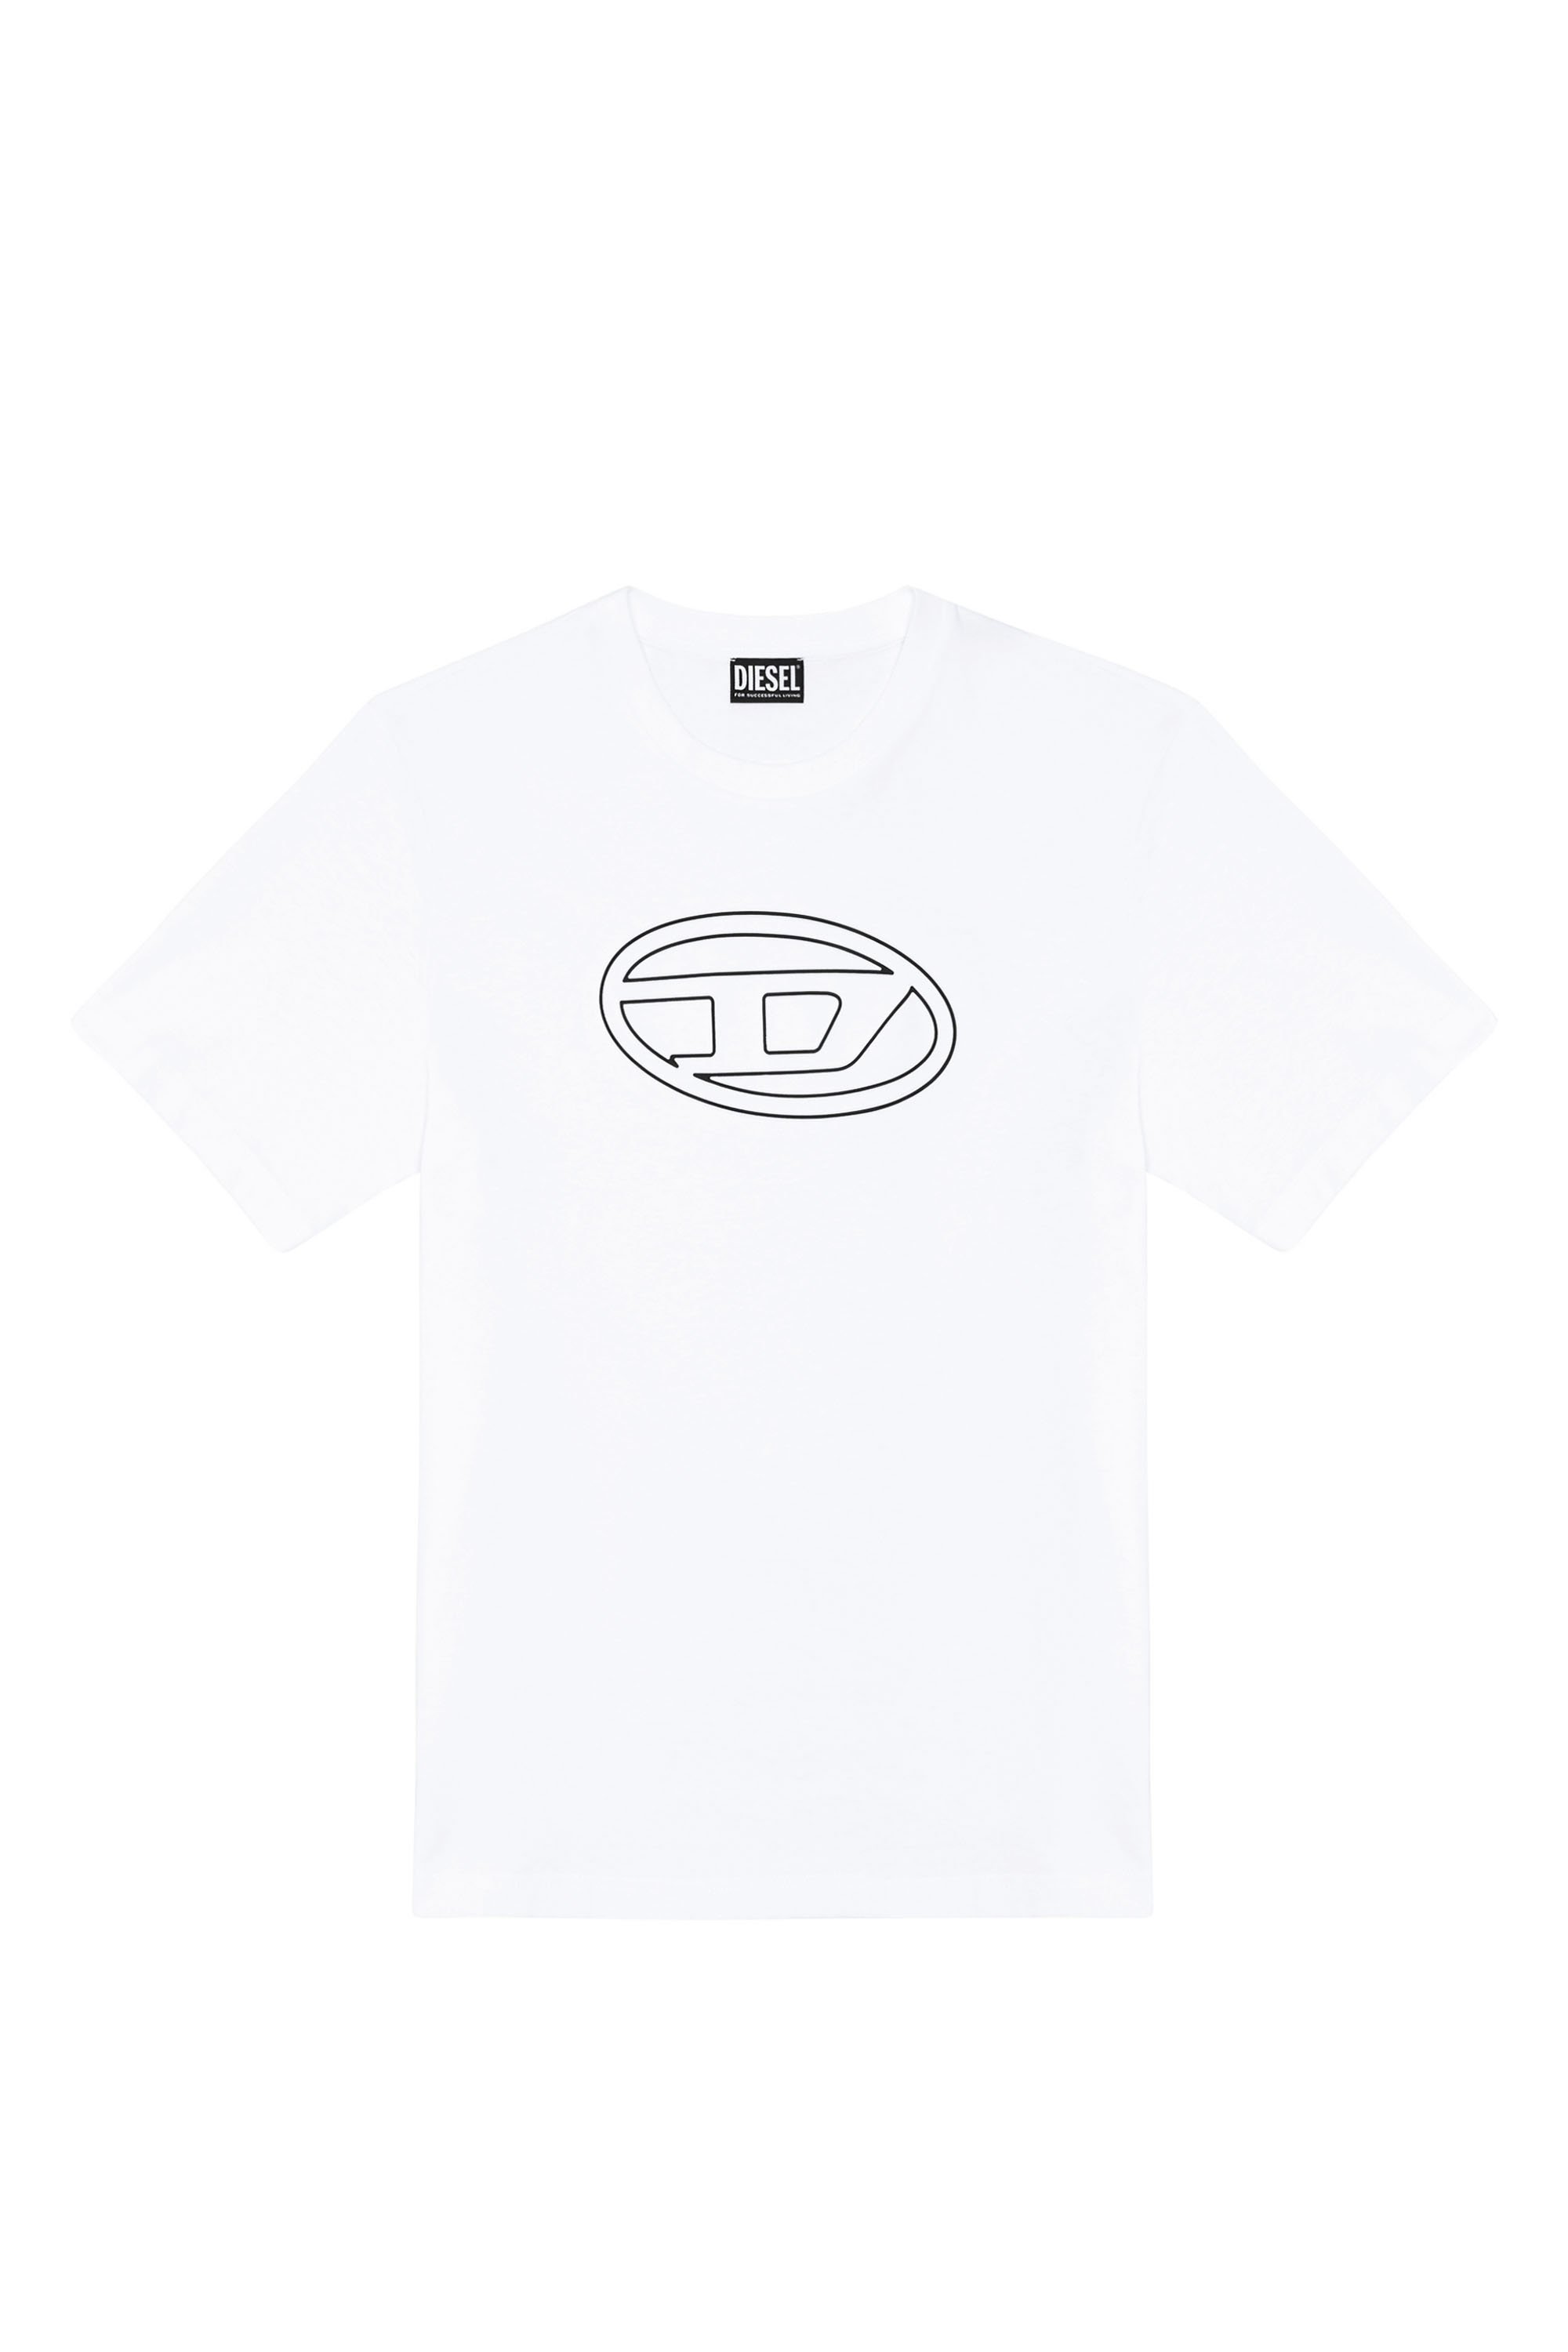 Diesel - T-JUST-BIGOVAL, Man T-shirt in vintage cotton jersey in White - Image 3